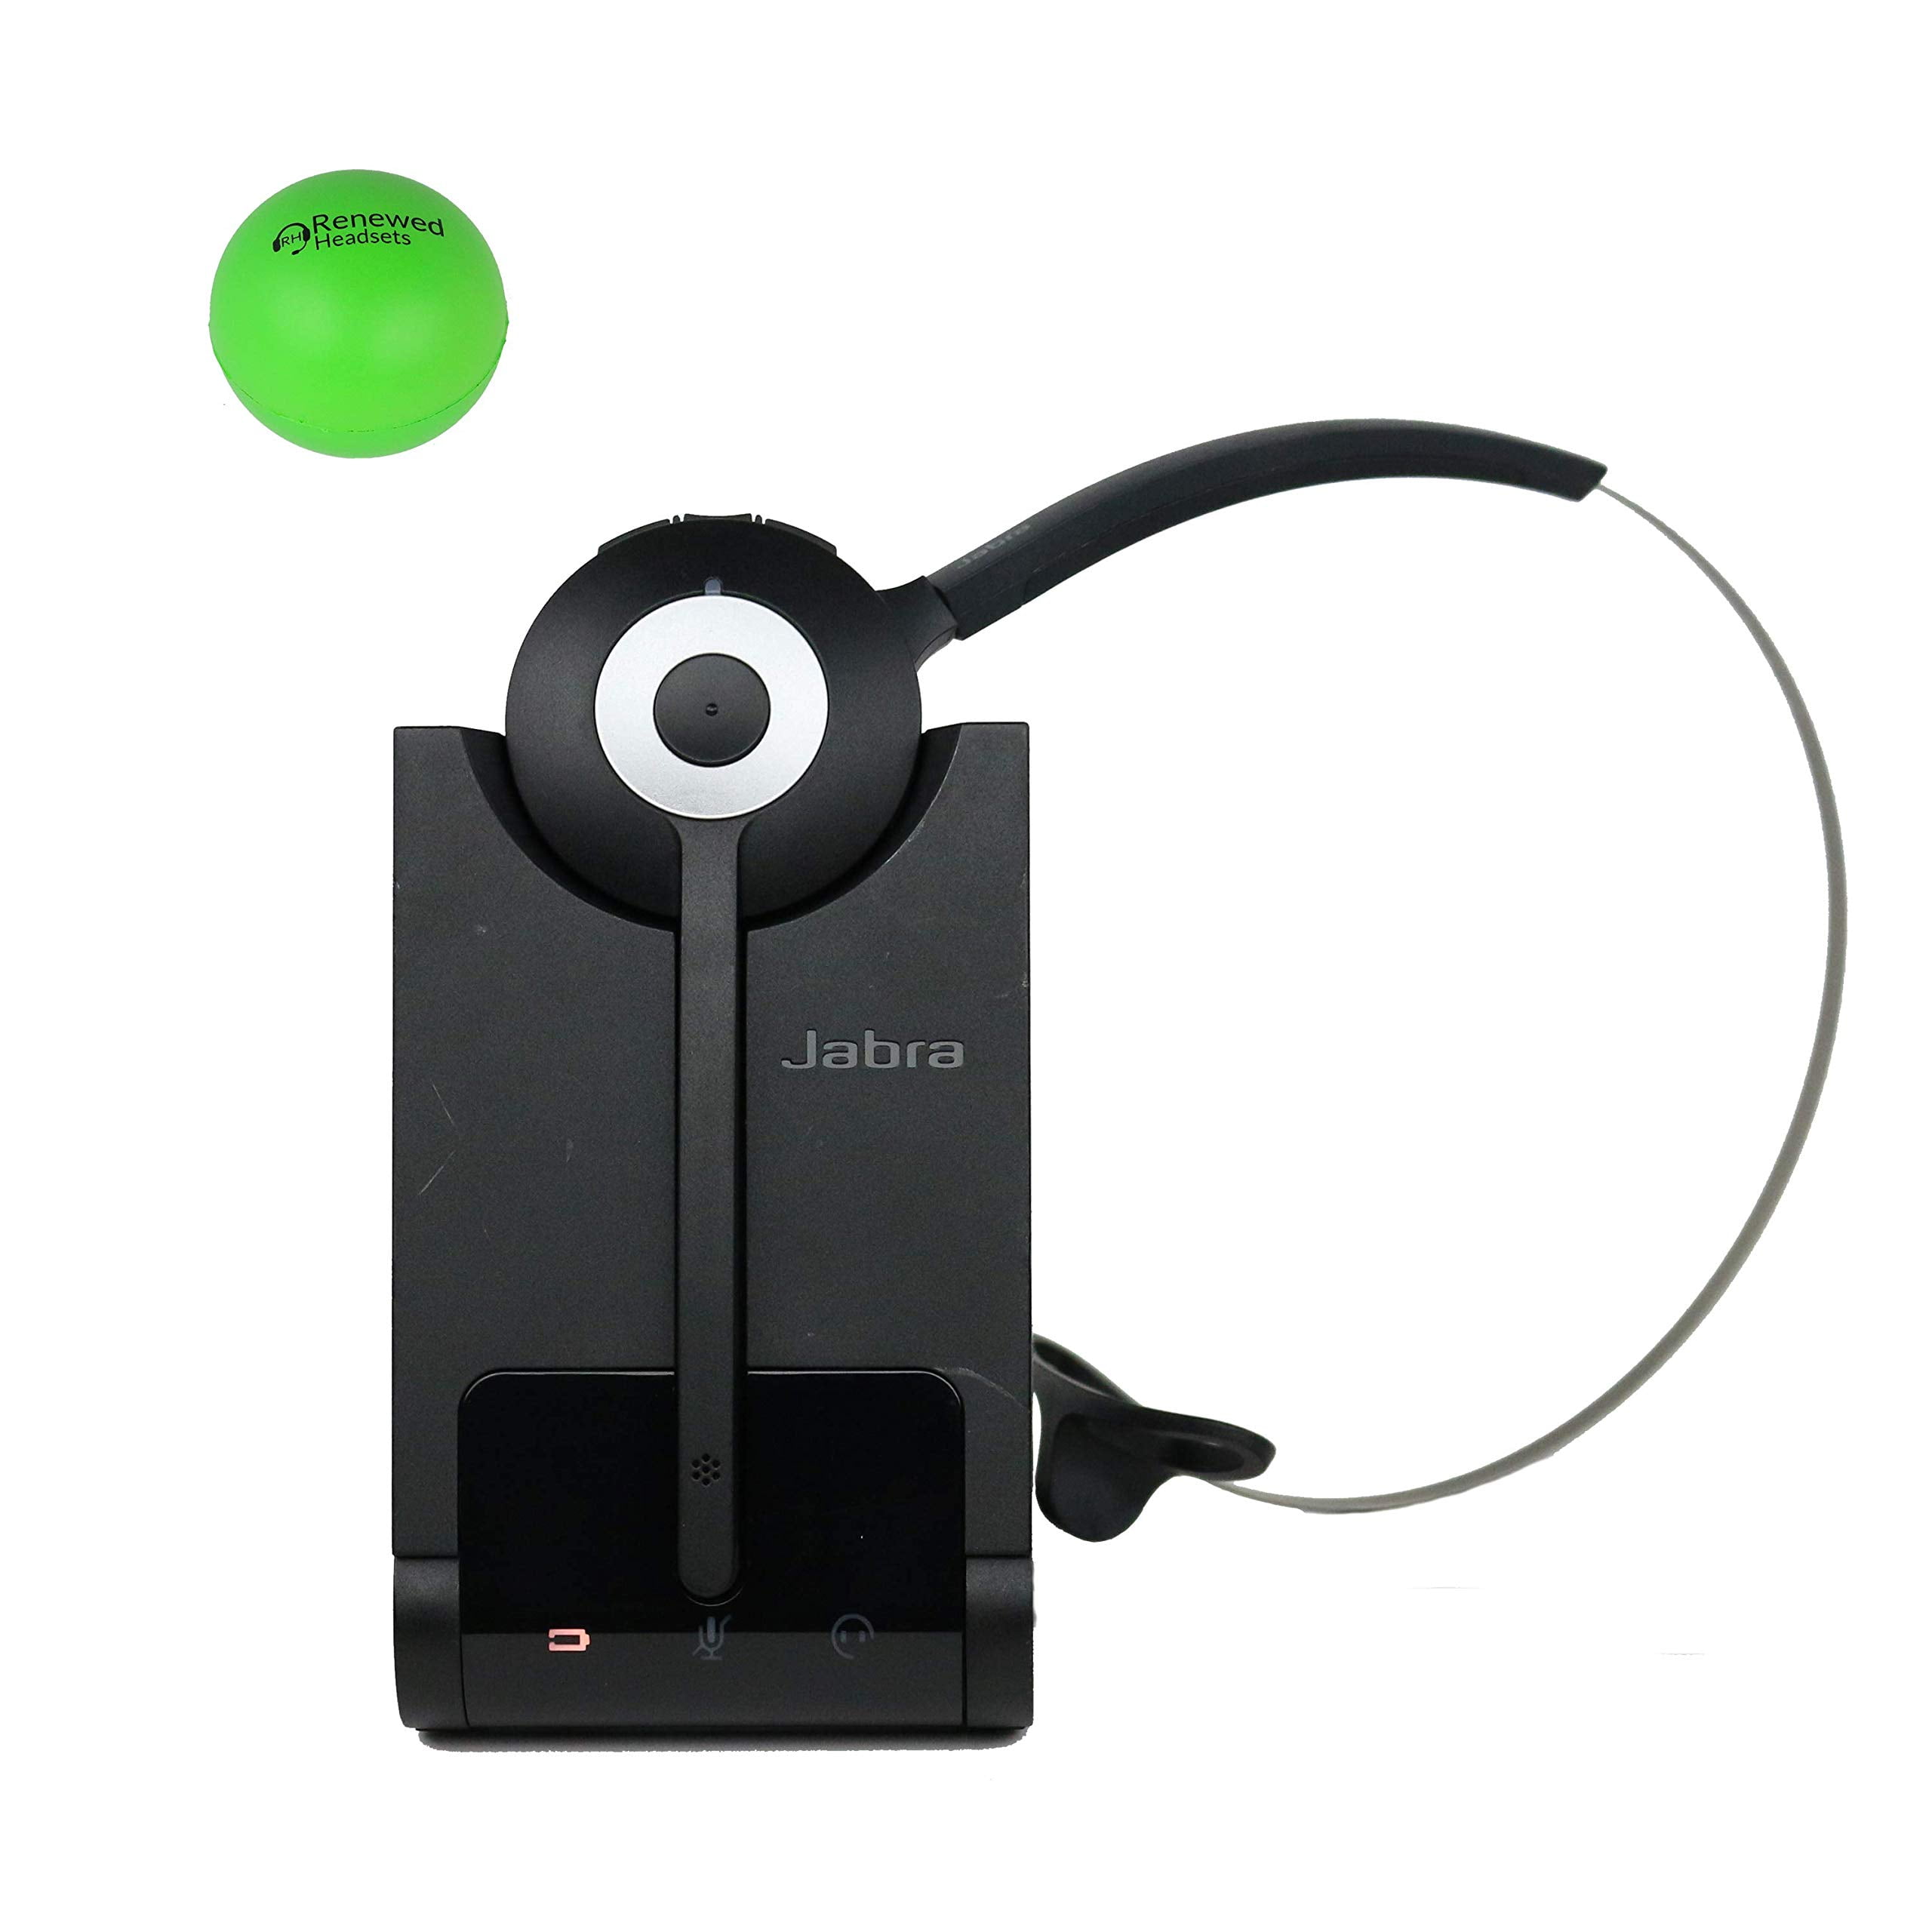 Jabra Pro Wireless Headset for Desk Phone with Renewed Headsets Stress Ball (Renewed) - Walmart.com